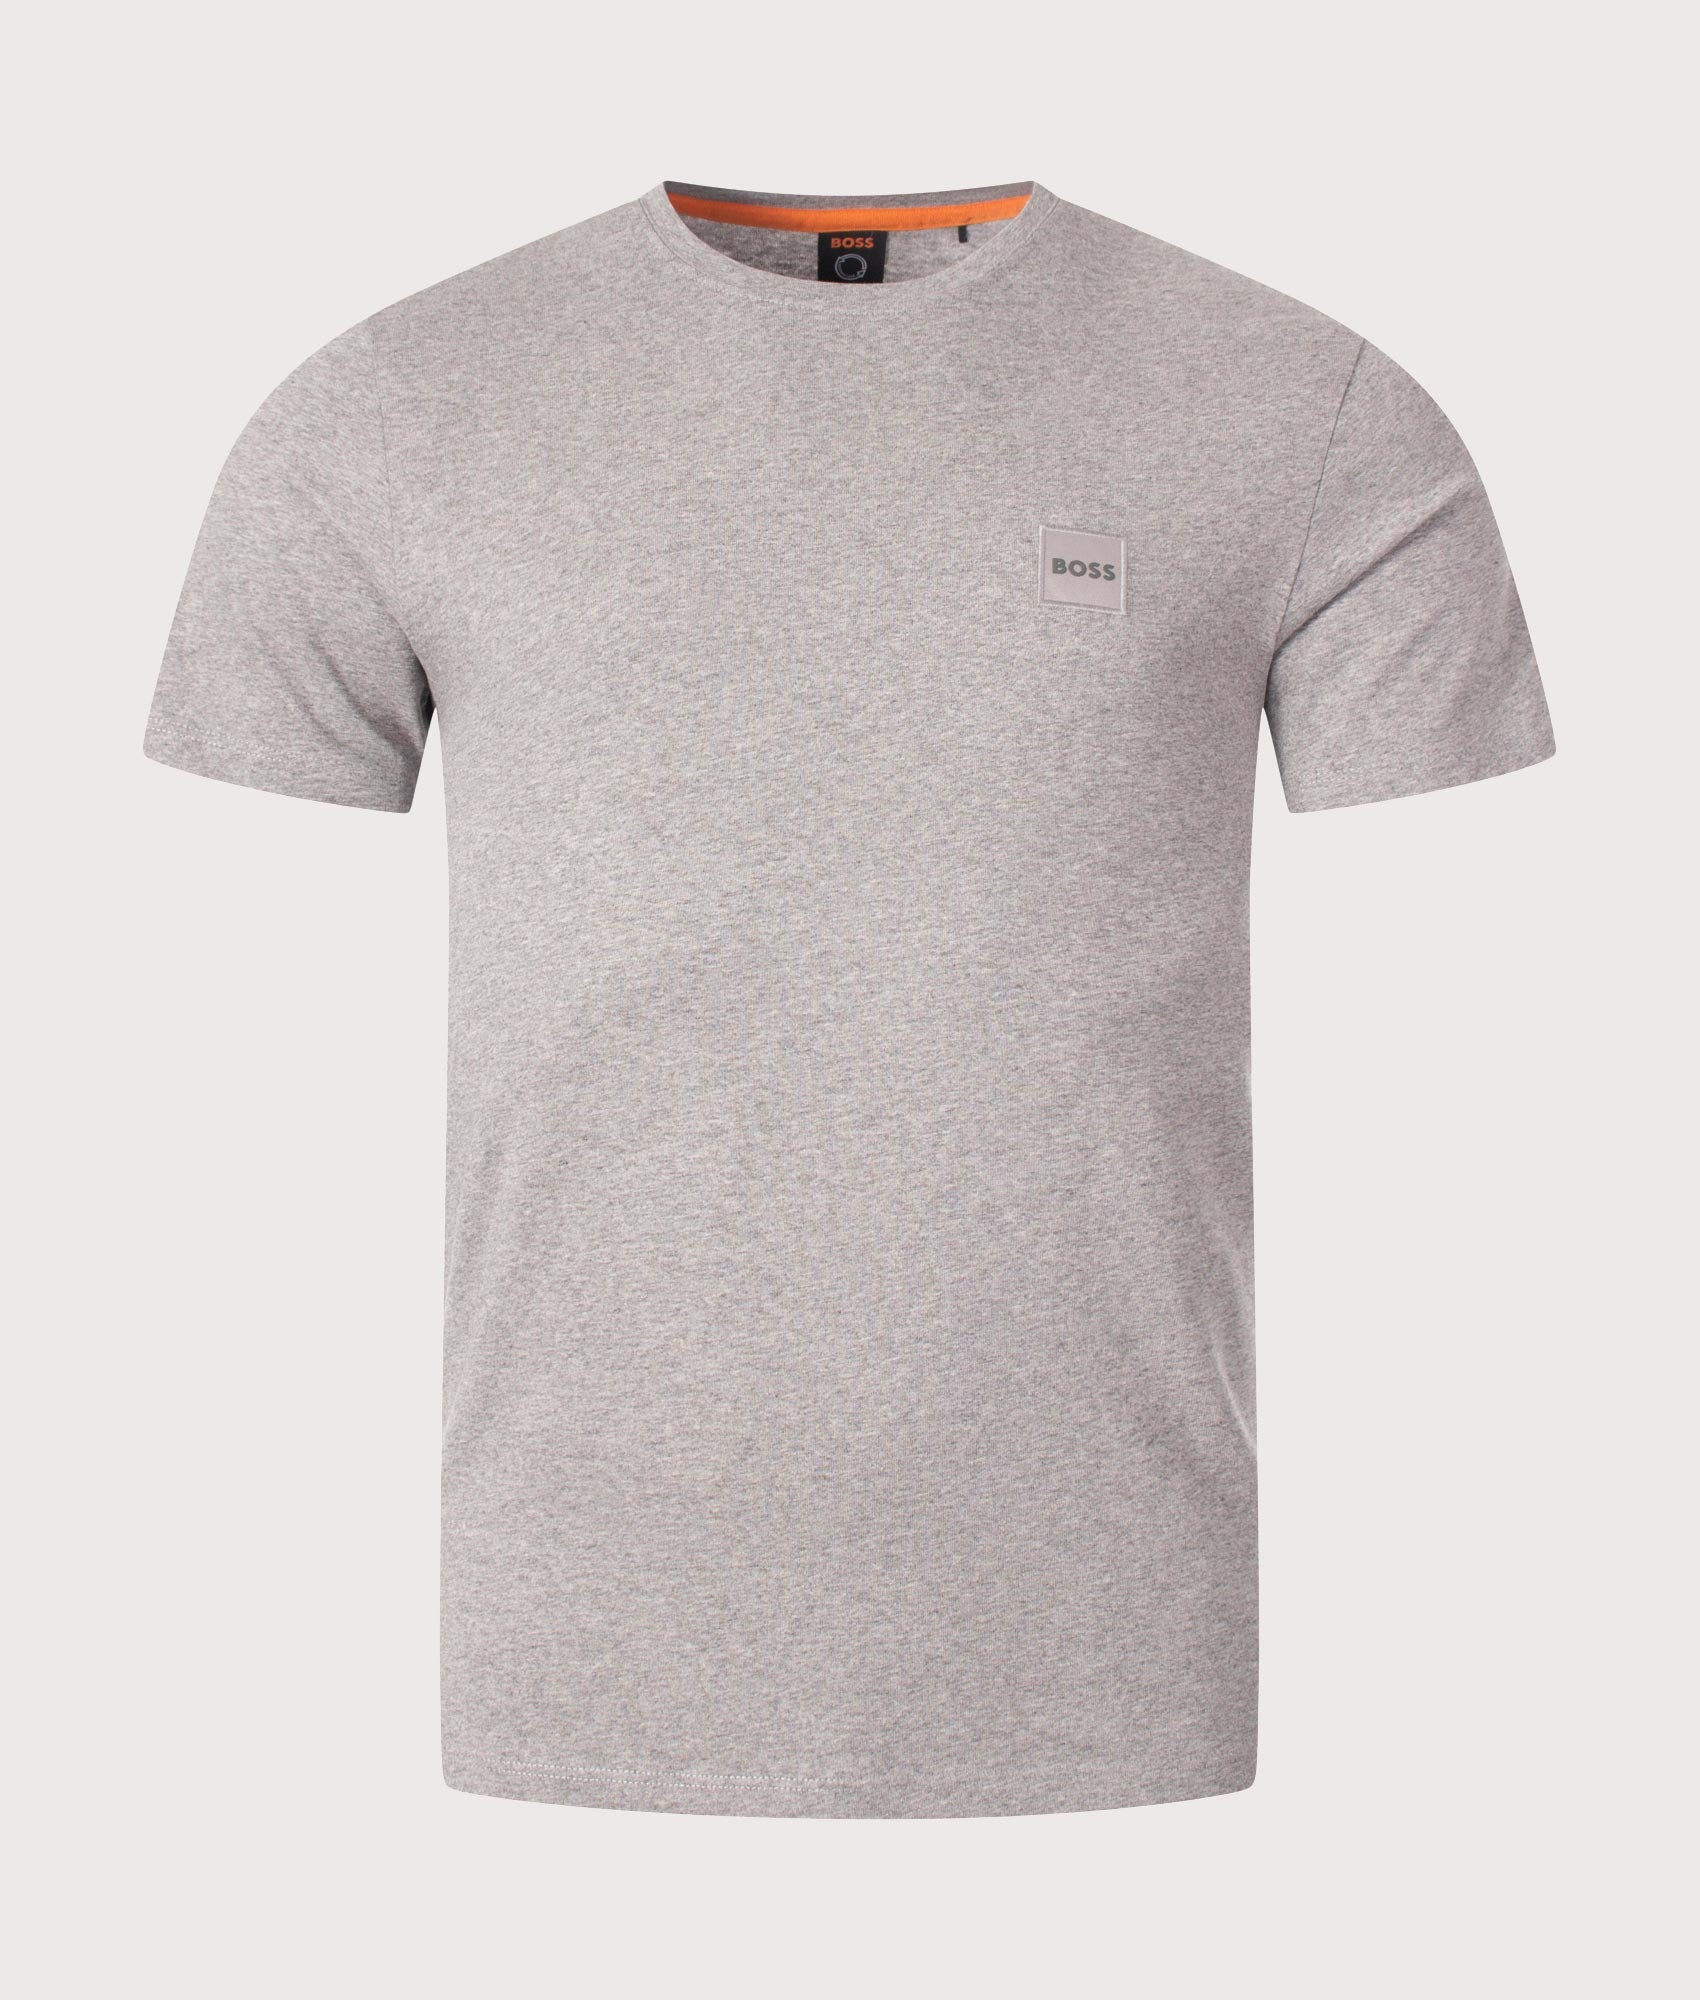 BOSS Mens Tales T-Shirt - Colour: 051 Light Pastel Grey - Size: Small